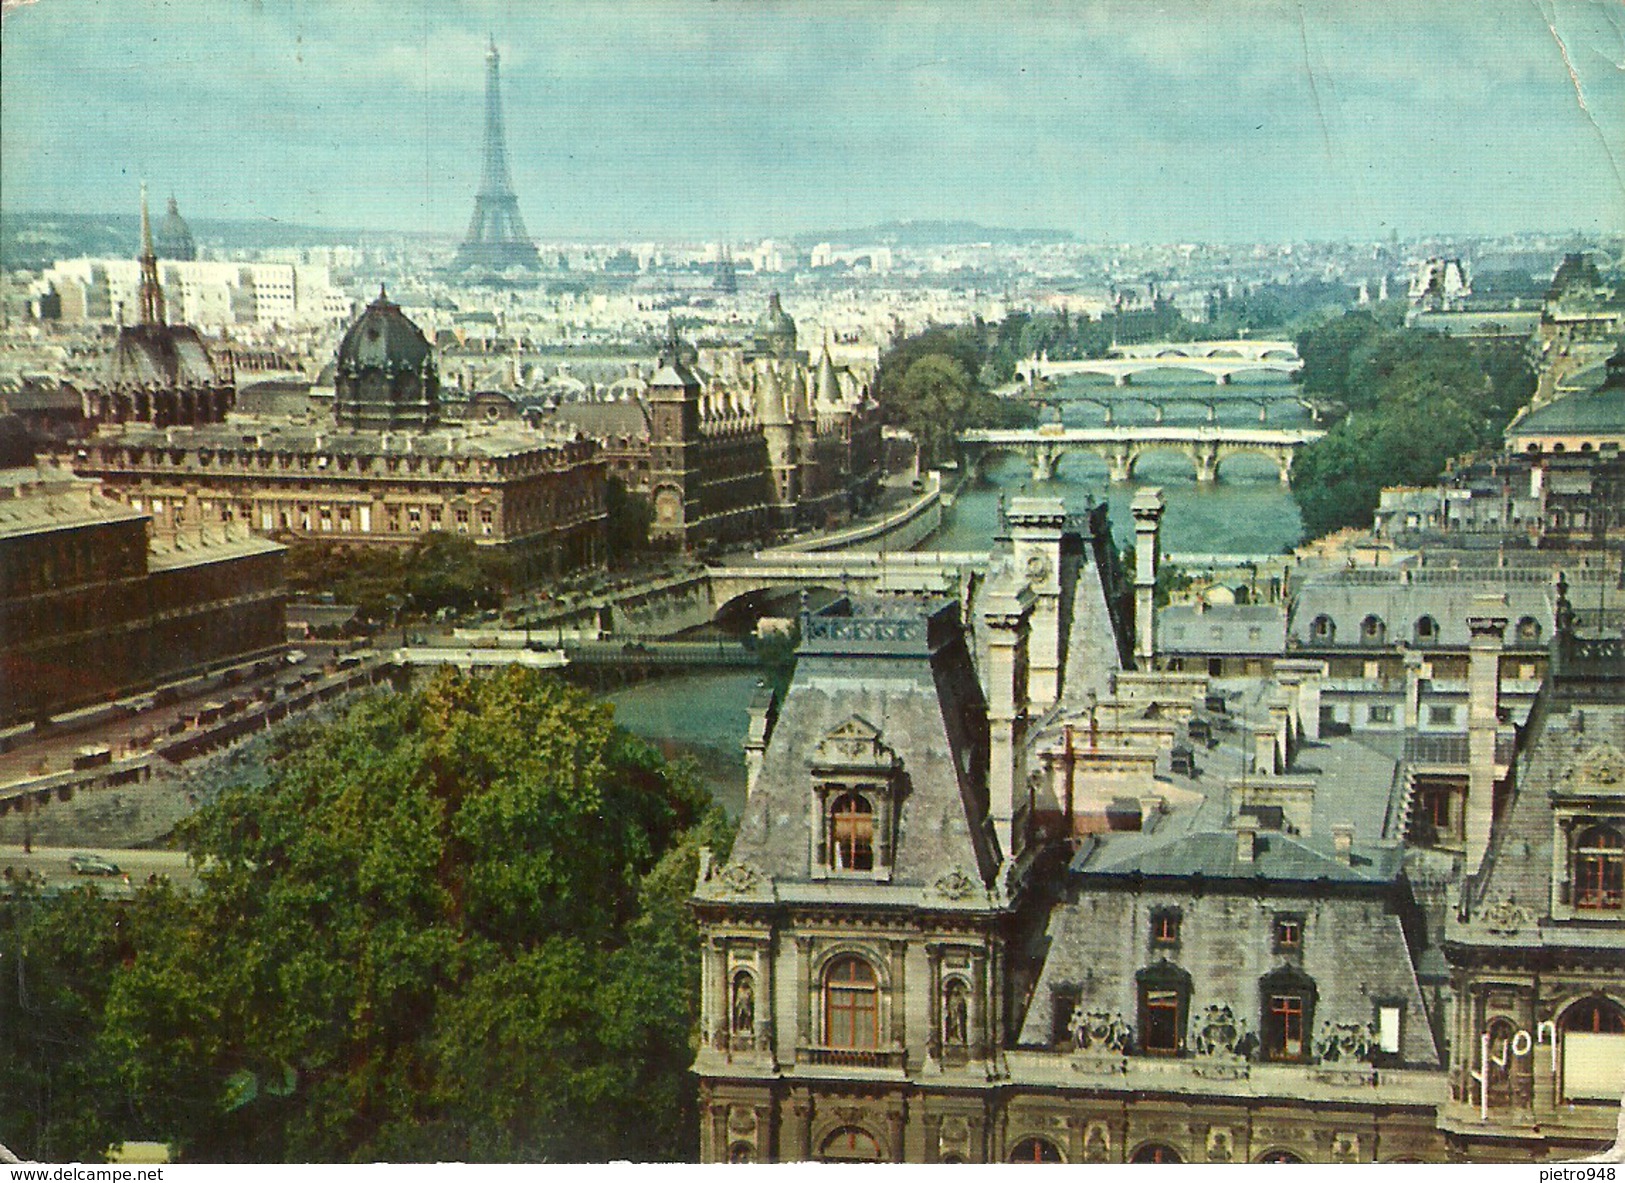 Paris (France) Perspective Des Sept Ponts, Vue Aerienne, Aerial View, Veduta Aerea, Luftansicht - Viste Panoramiche, Panorama